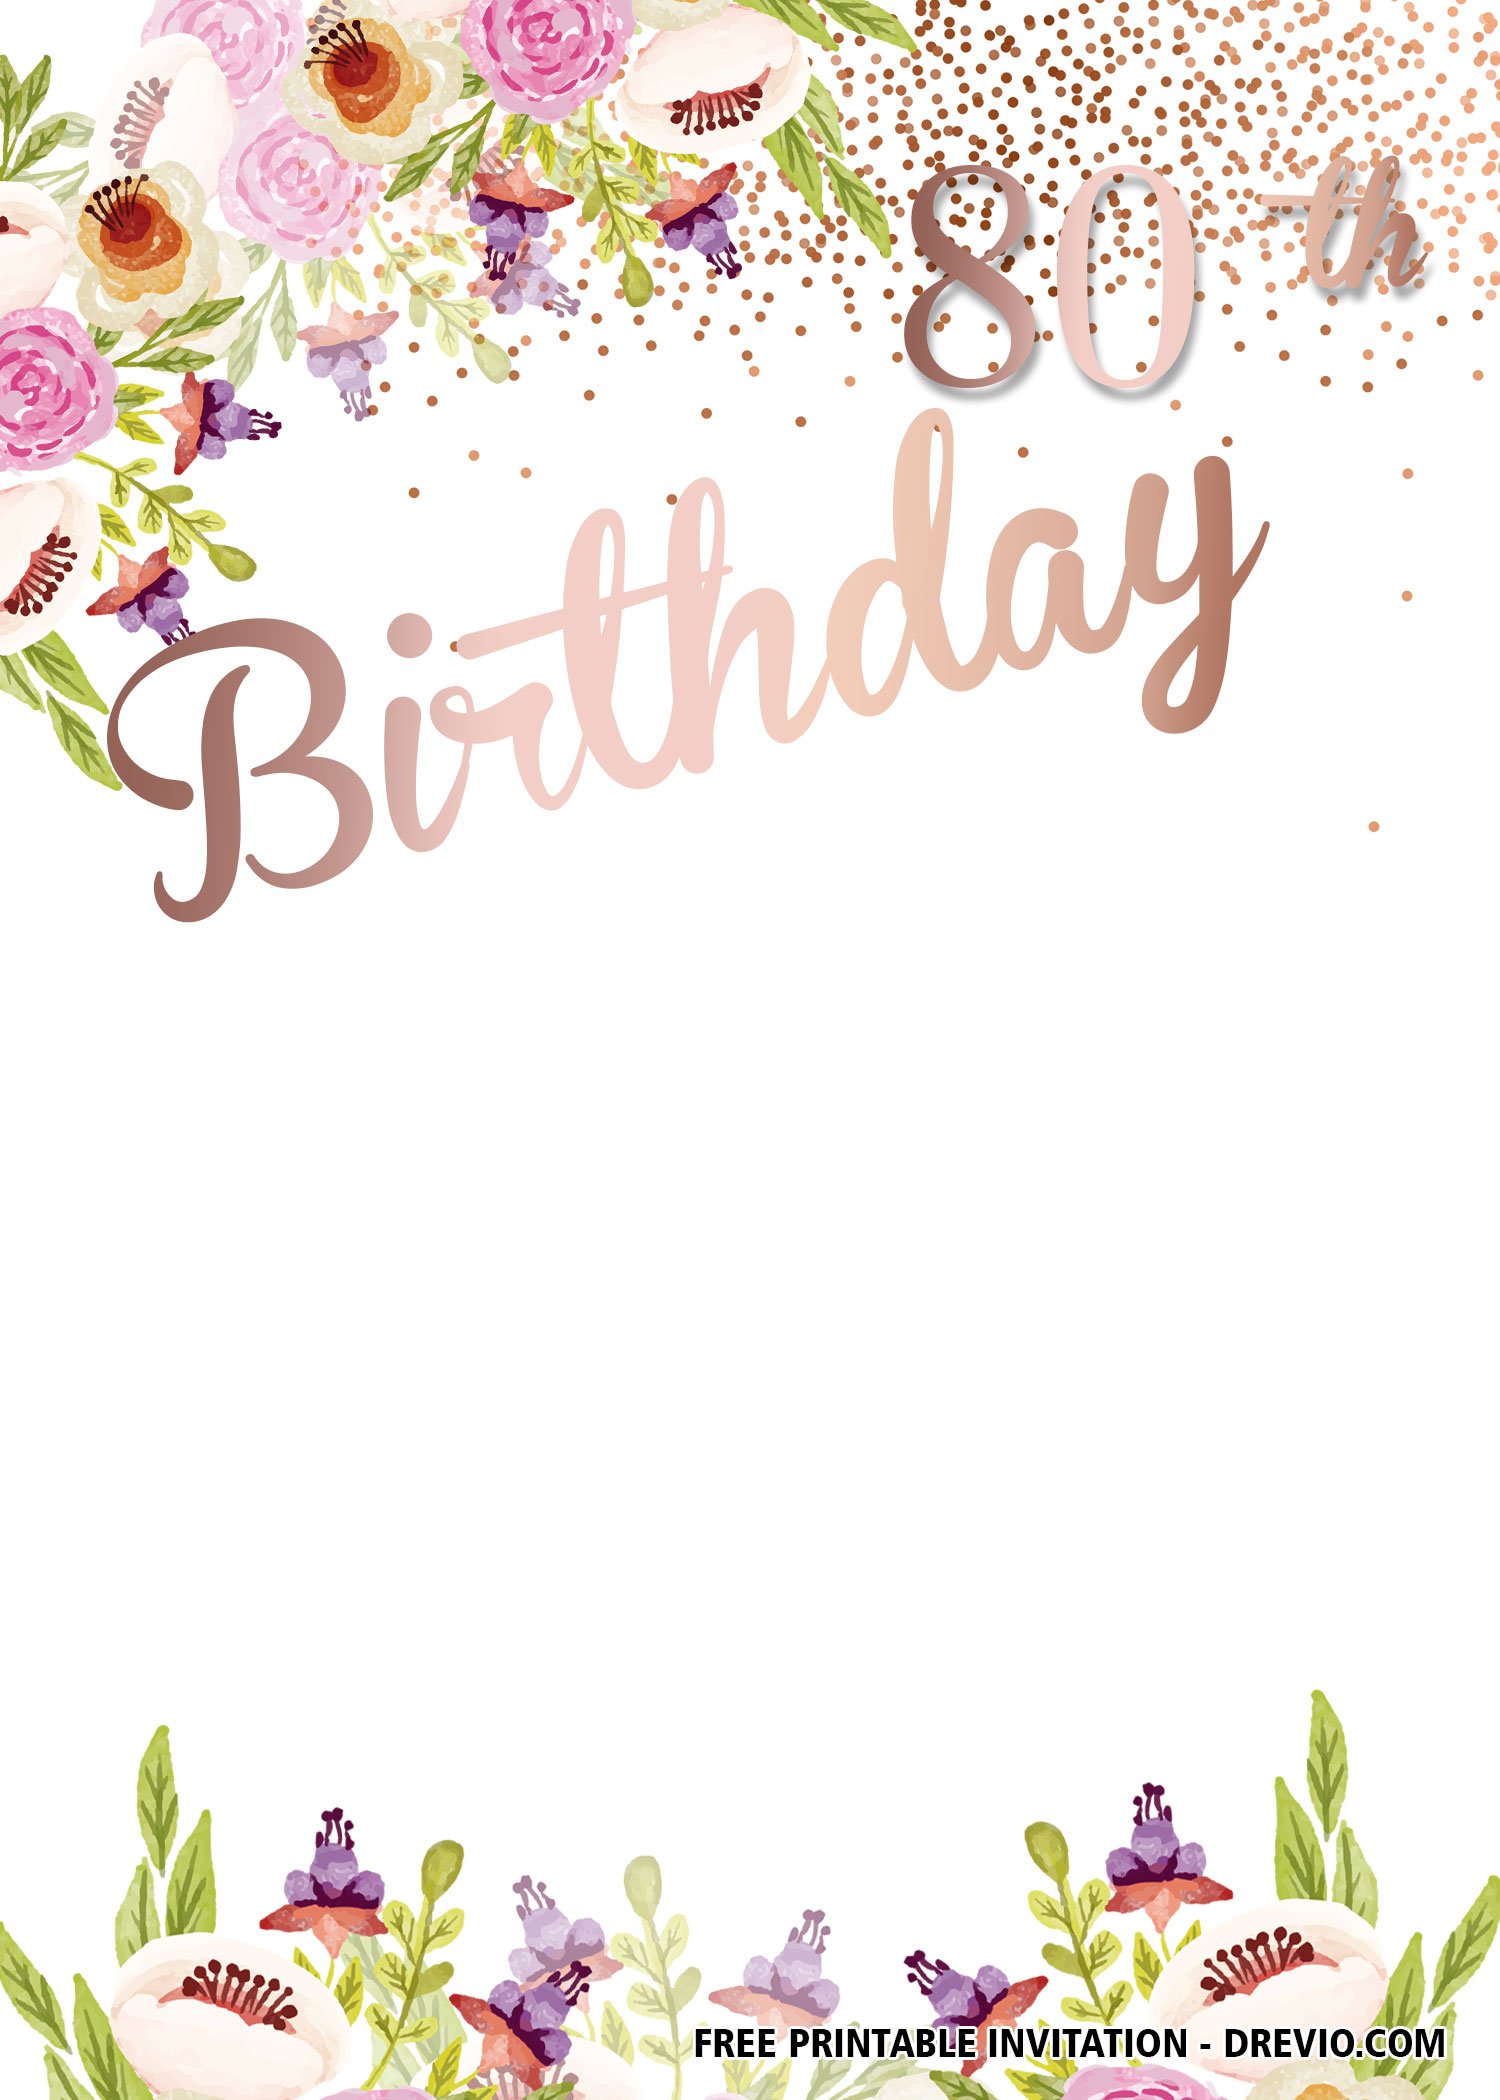 free-diy-80th-birthday-invitation-templates-download-hundreds-free-printable-birthday